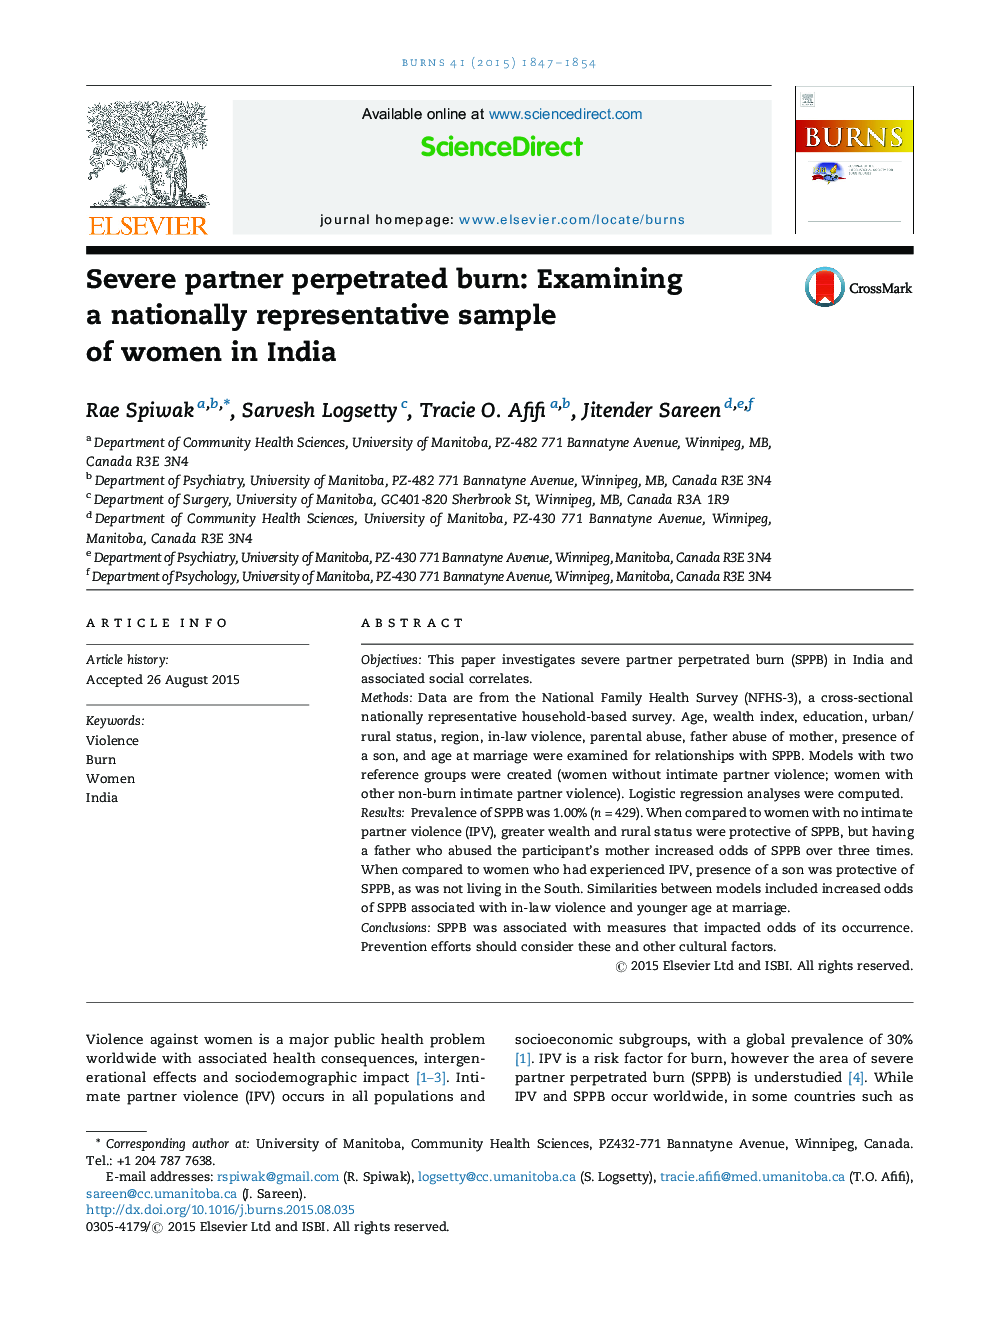 Severe partner perpetrated burn: Examining a nationally representative sample of women in India